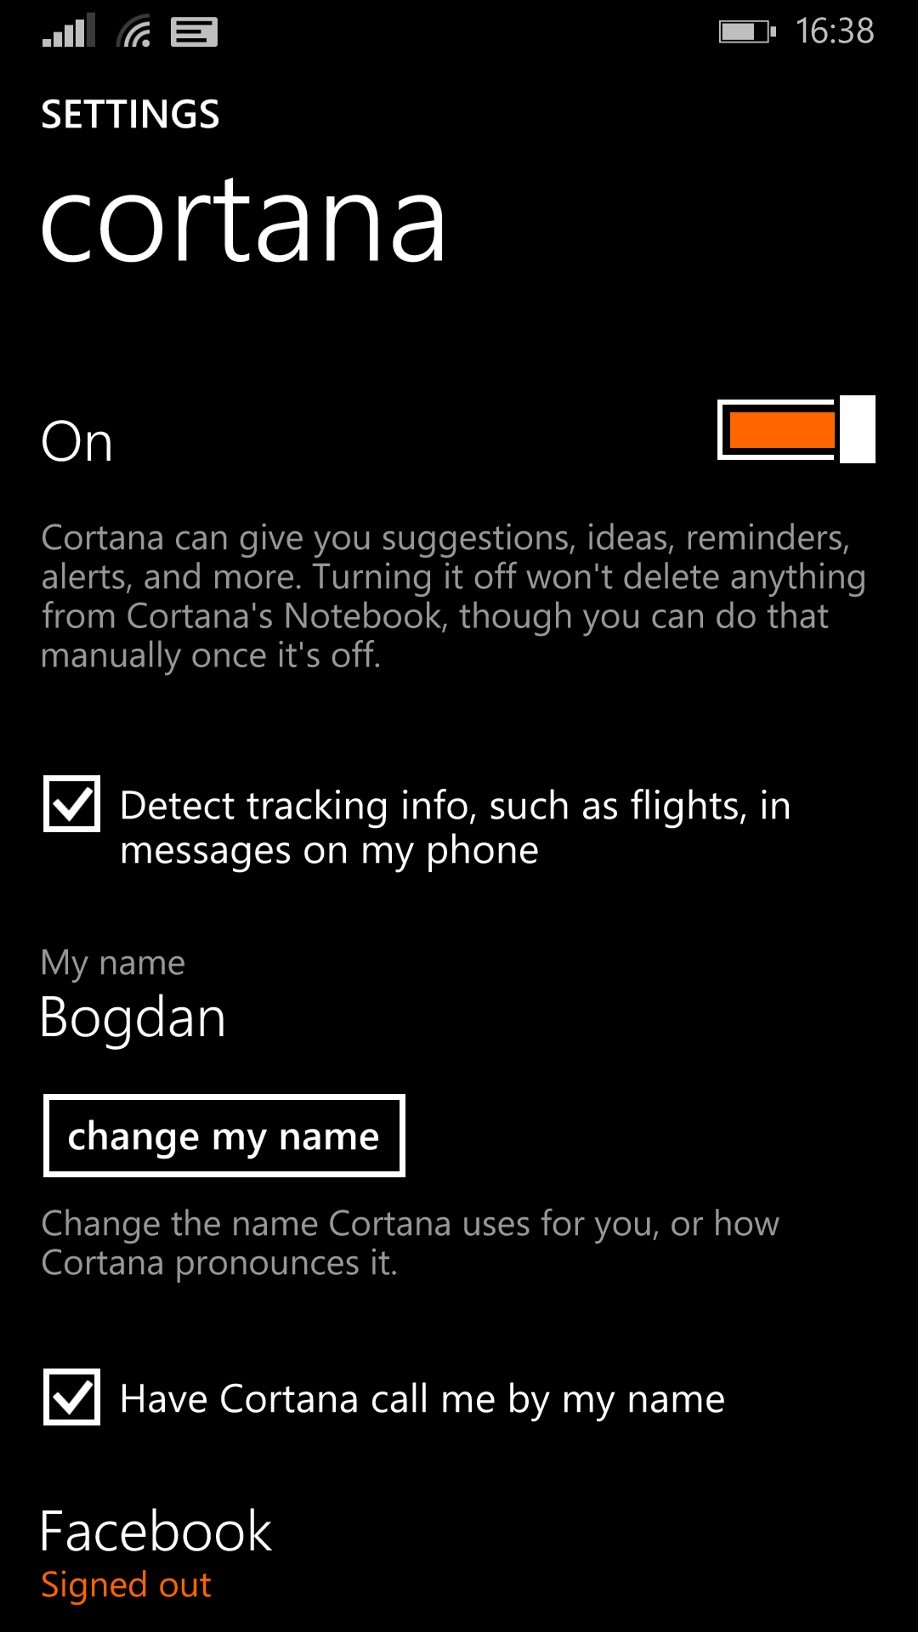 Cortana-for-Windows-10-Screenshots-Leaked-467088-7.jpg